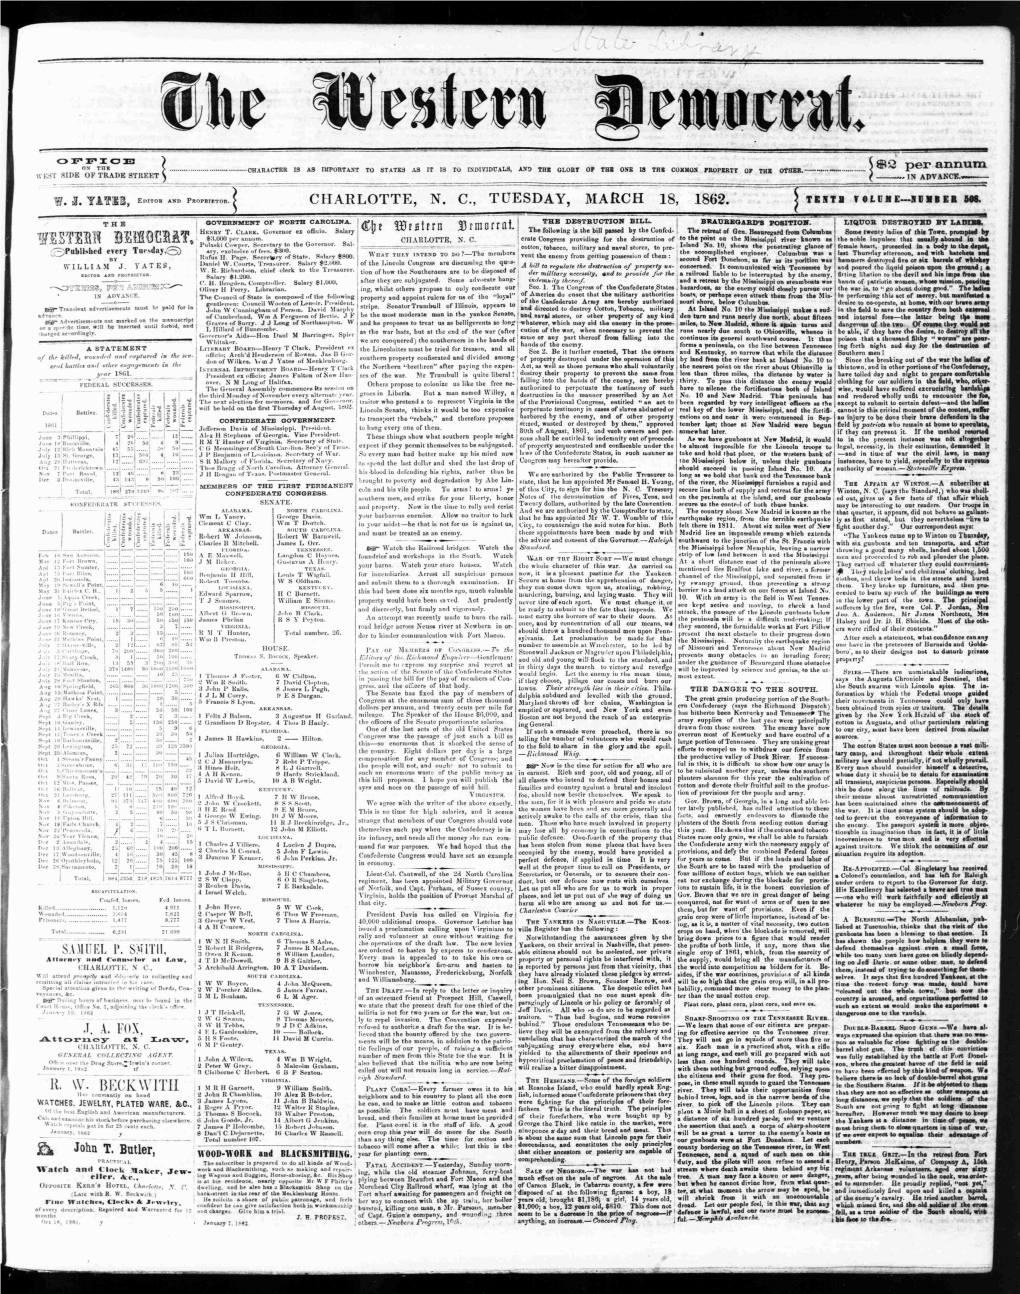 CHARLOTTE, N. C, TUESDAY, MARCH 18, 1862. TENTH T Olujiencuder 5C3